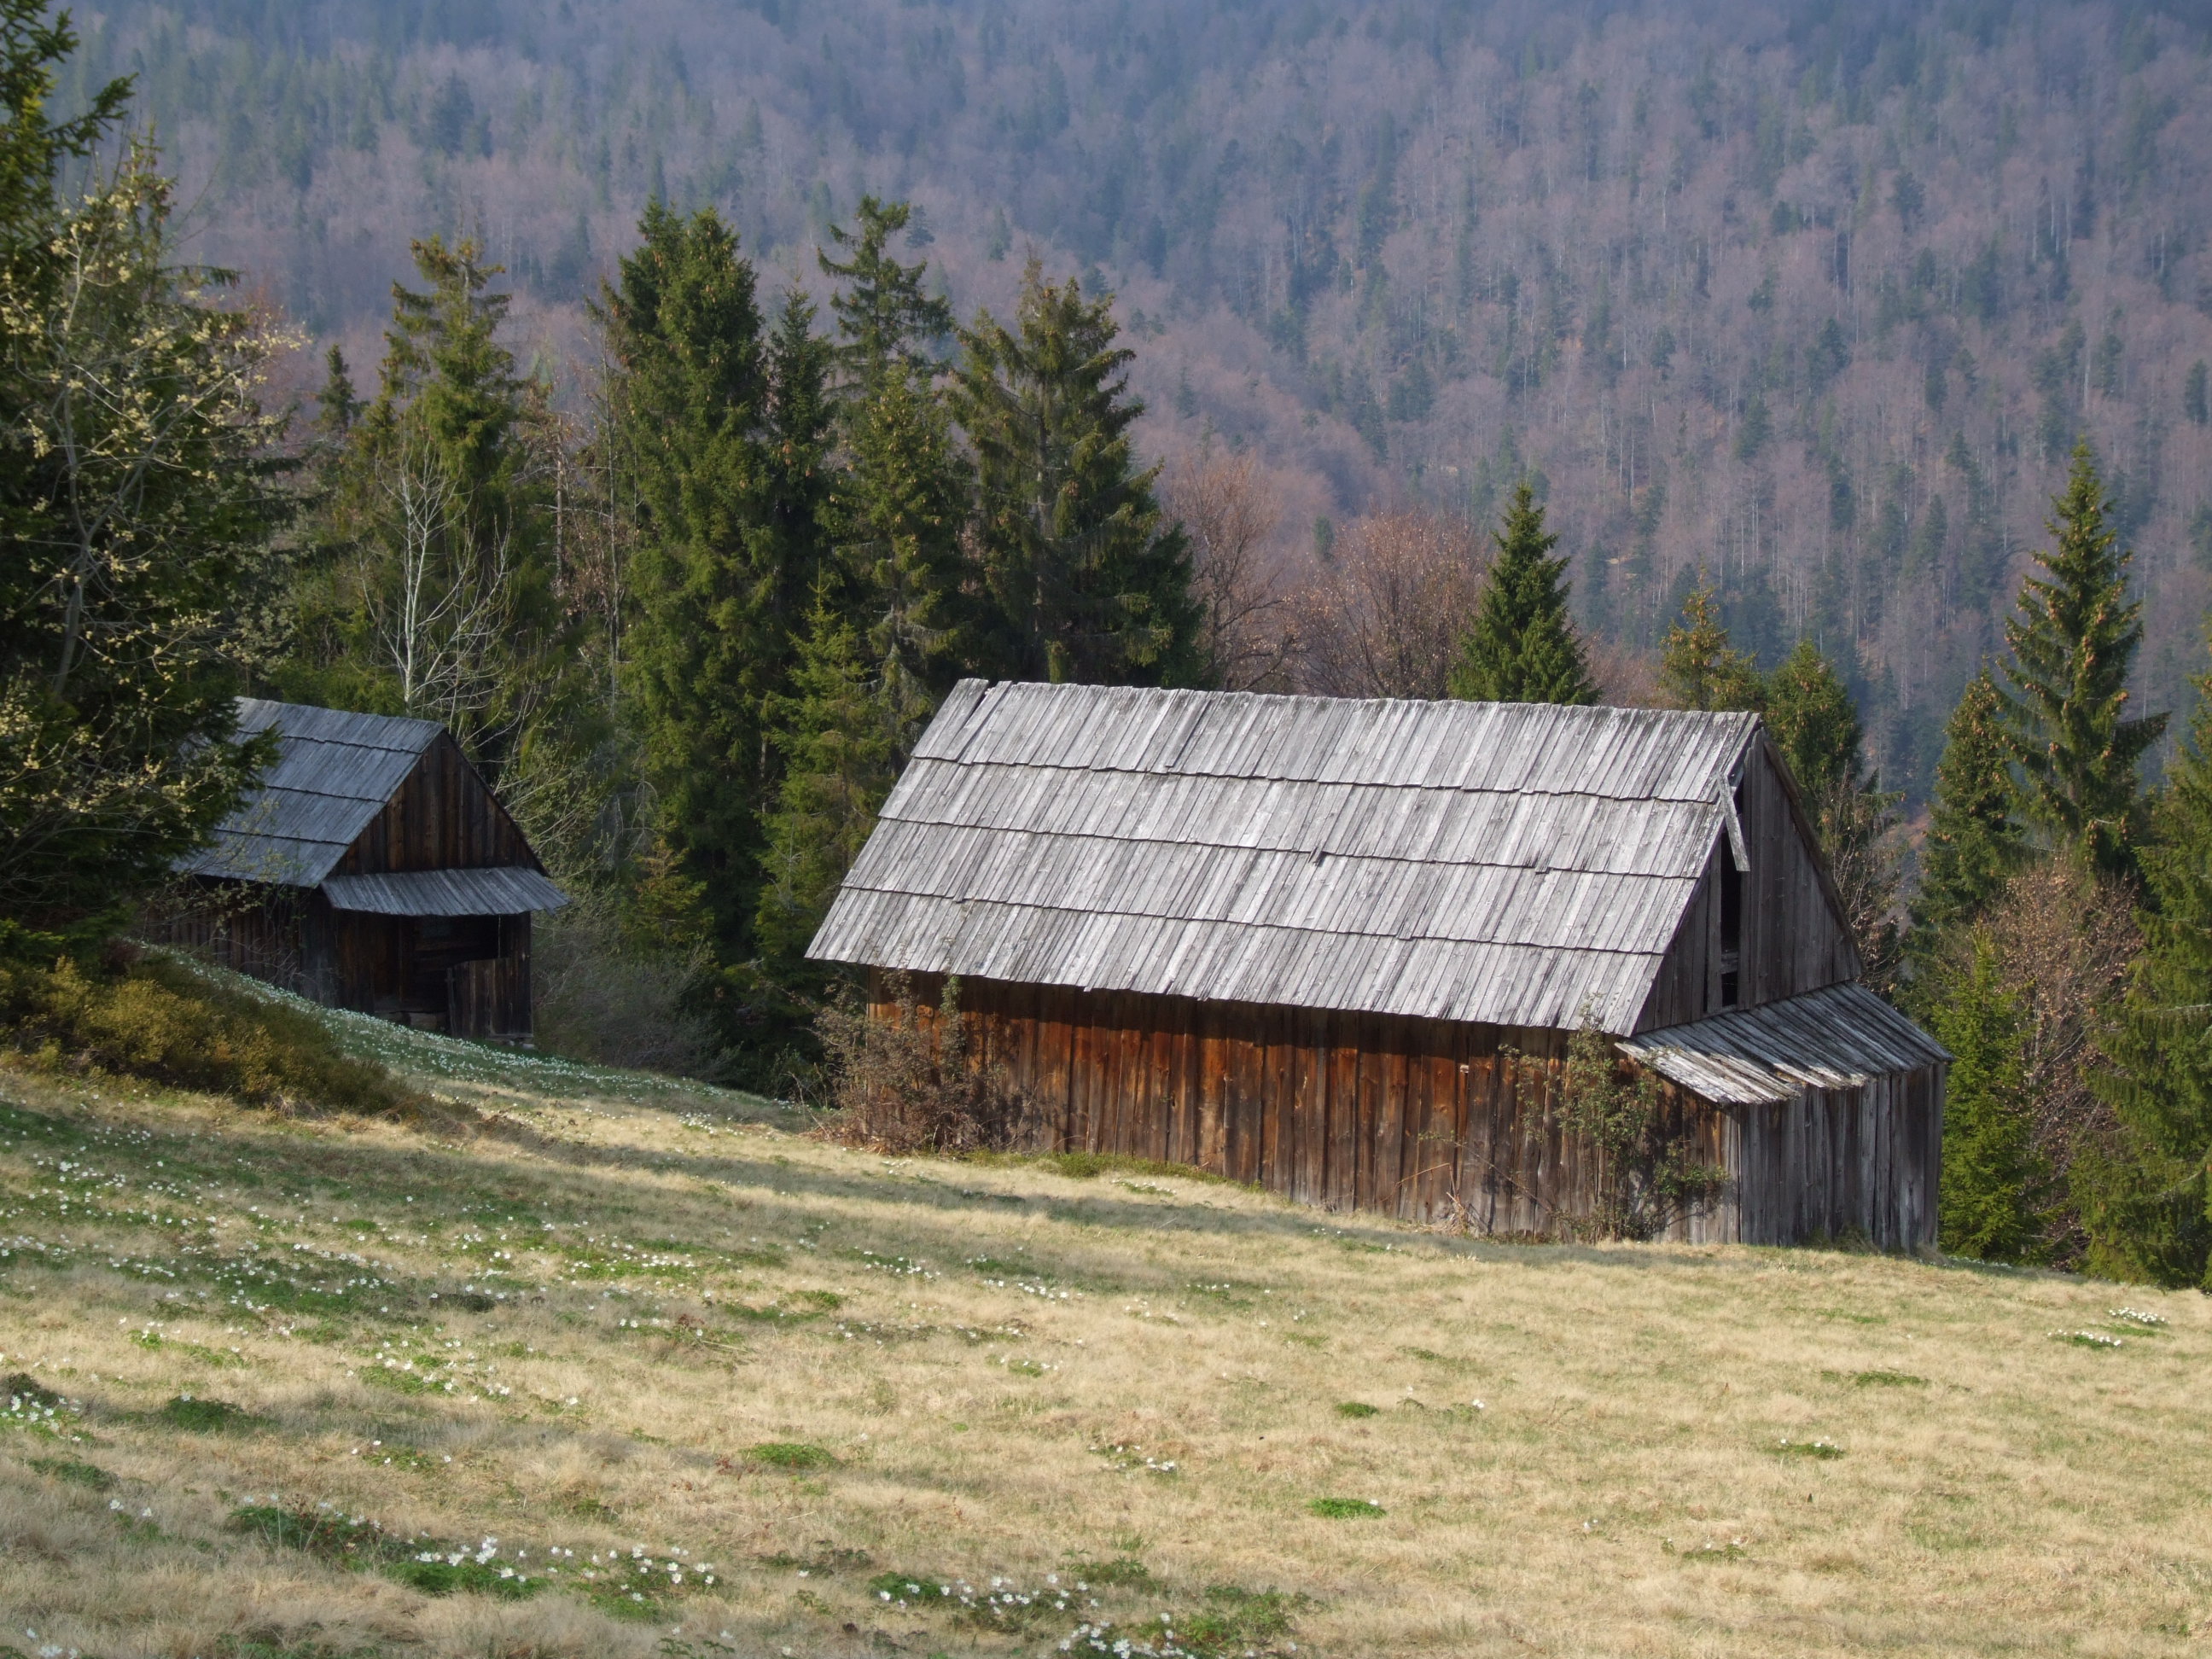 File:Gorce - old hut.JPG - Wikimedia Commons